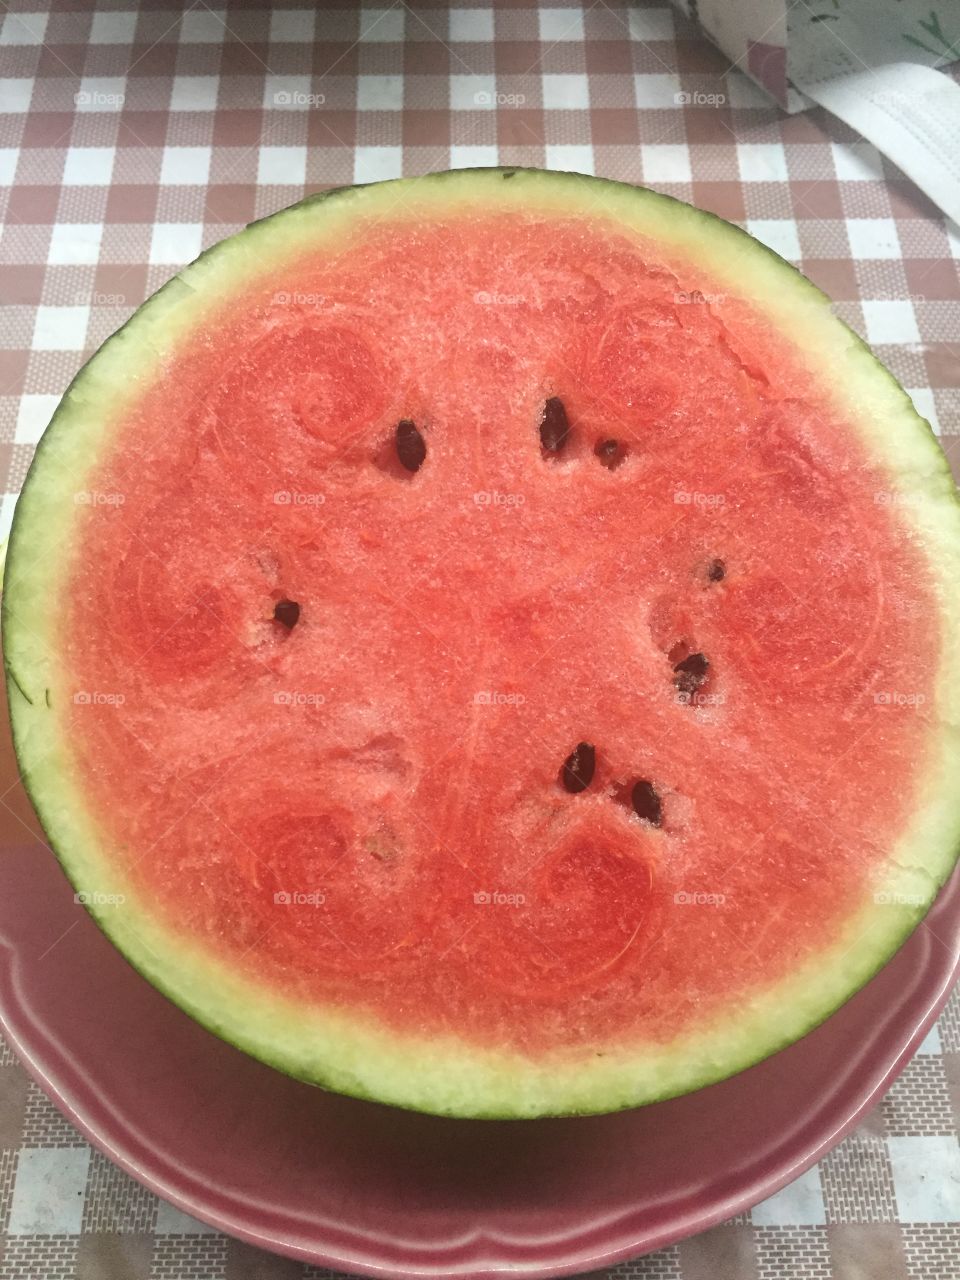 Mom bought watermelon 